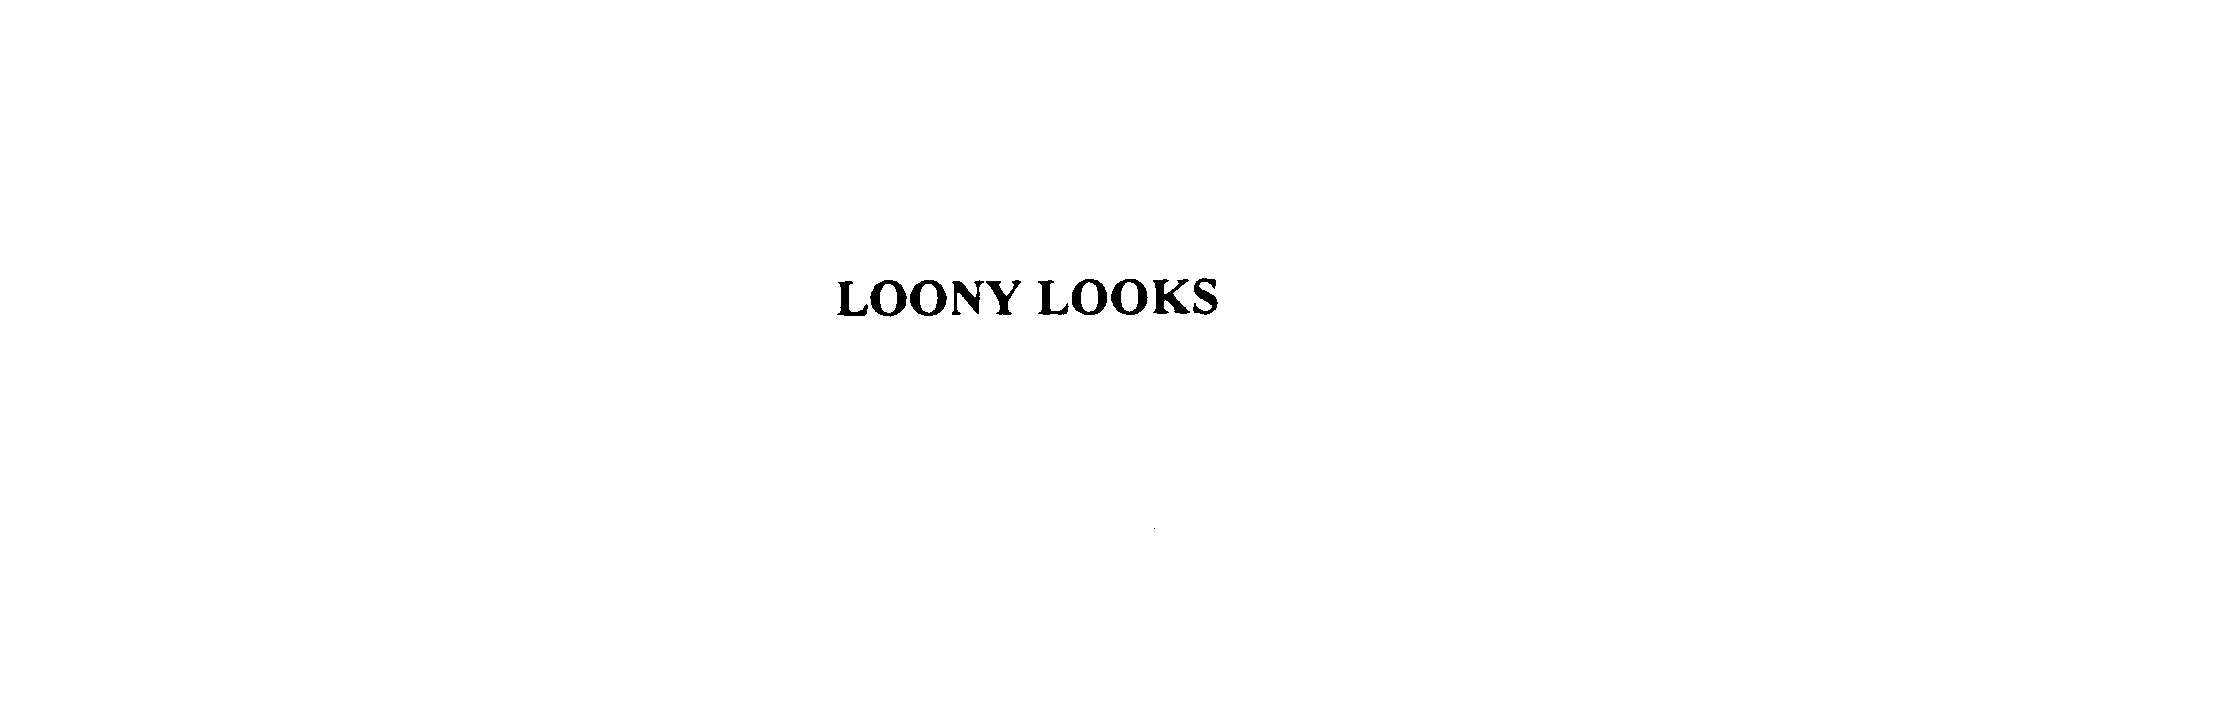  LOONY LOOKS